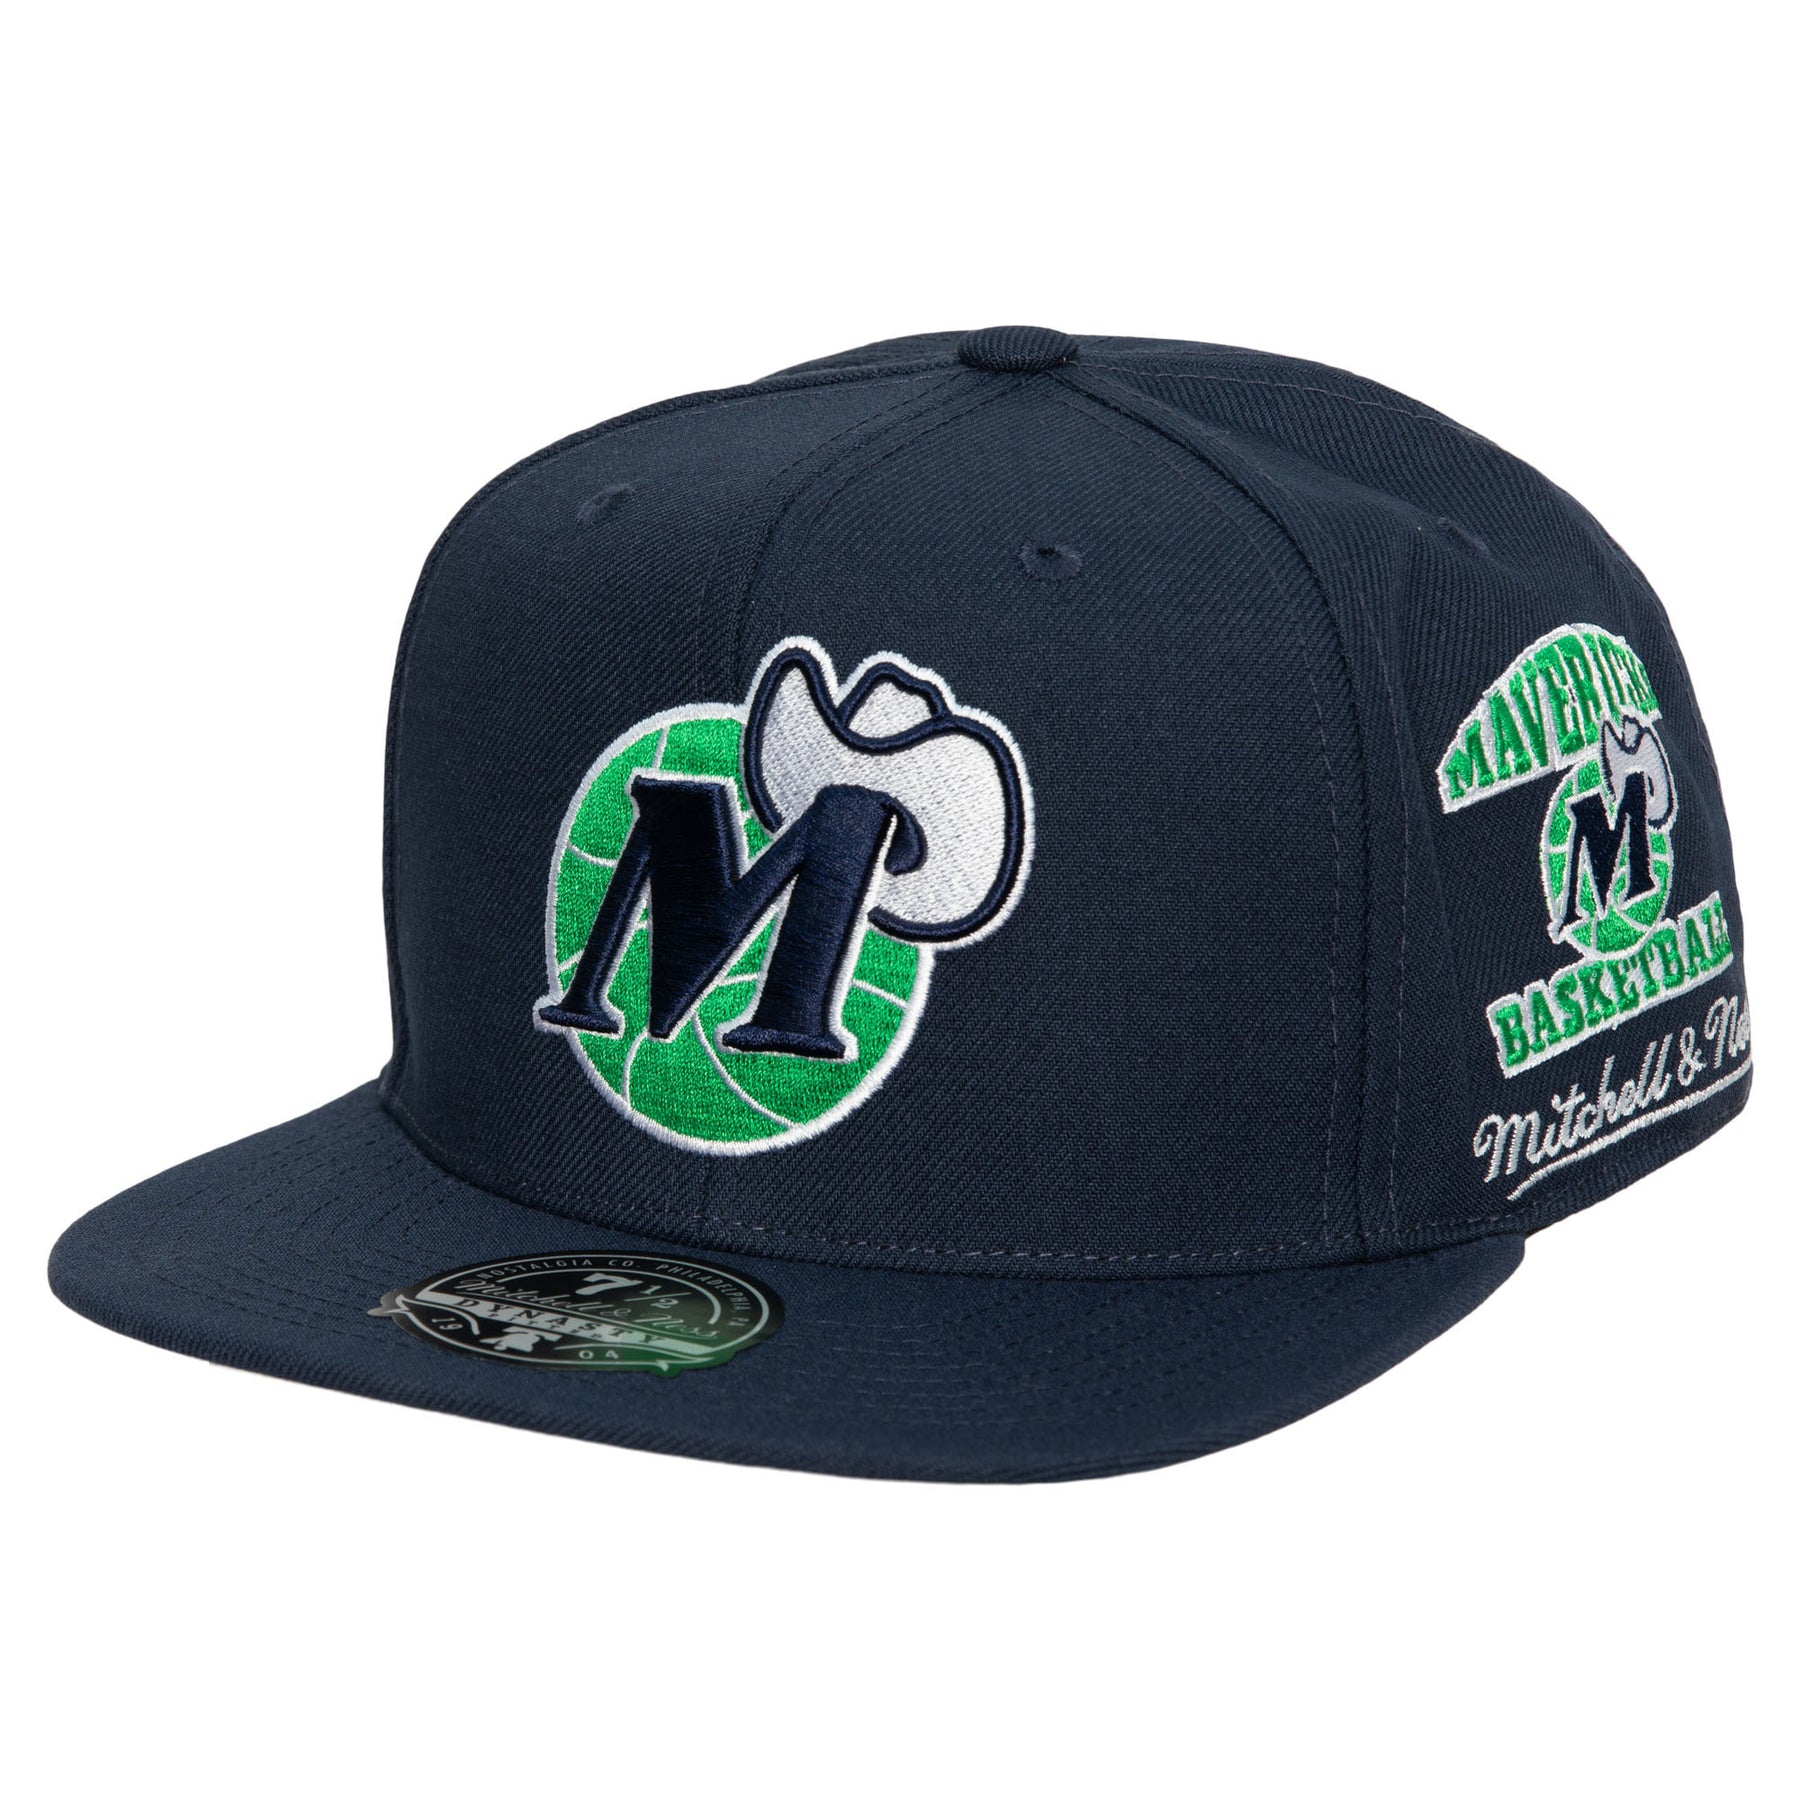 Youth Mitchell & Ness Navy/Green Dallas Mavericks Two-Tone Snapback Hat